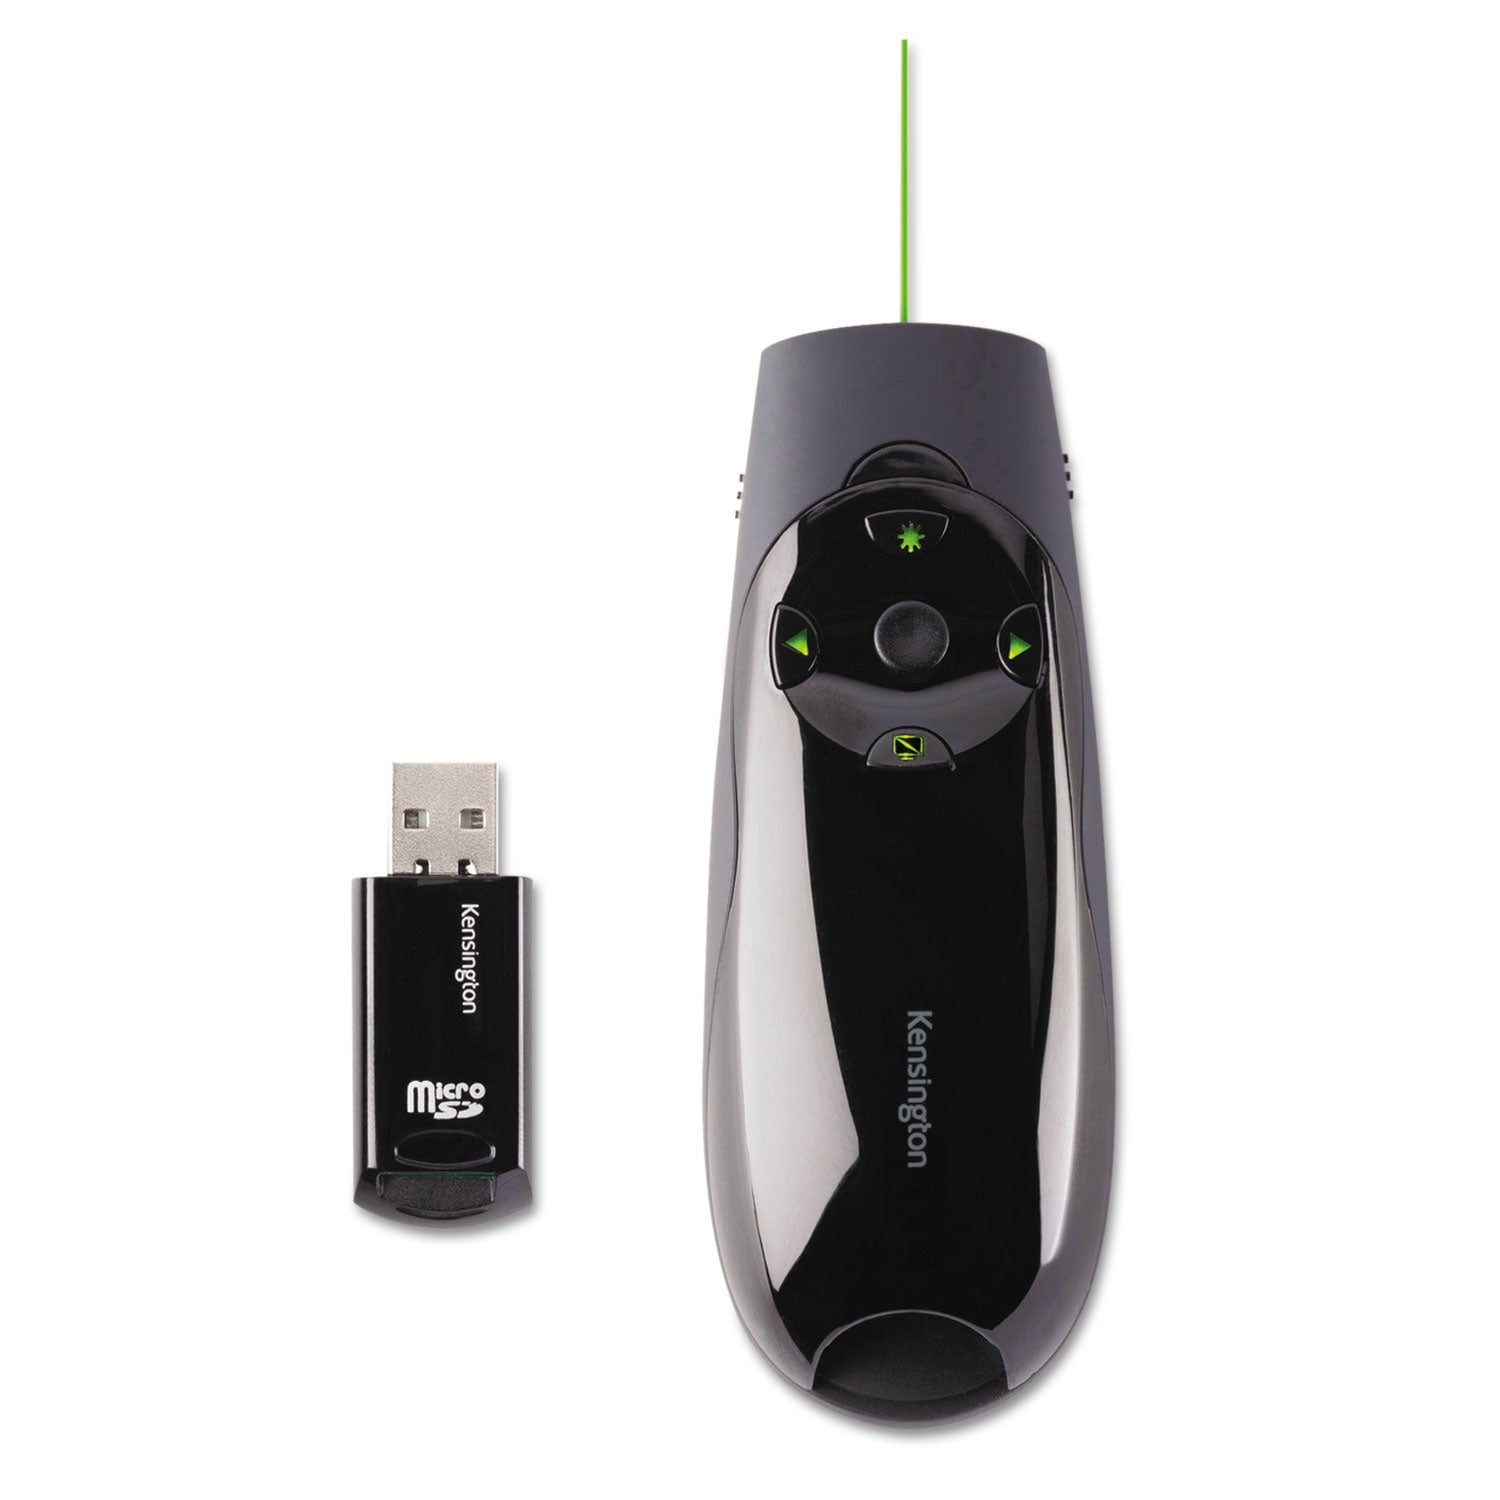 presenter-expert-wireless-cursor-control-with-green-laser-class-2-150-ft-range-black_kmw72426 - 1